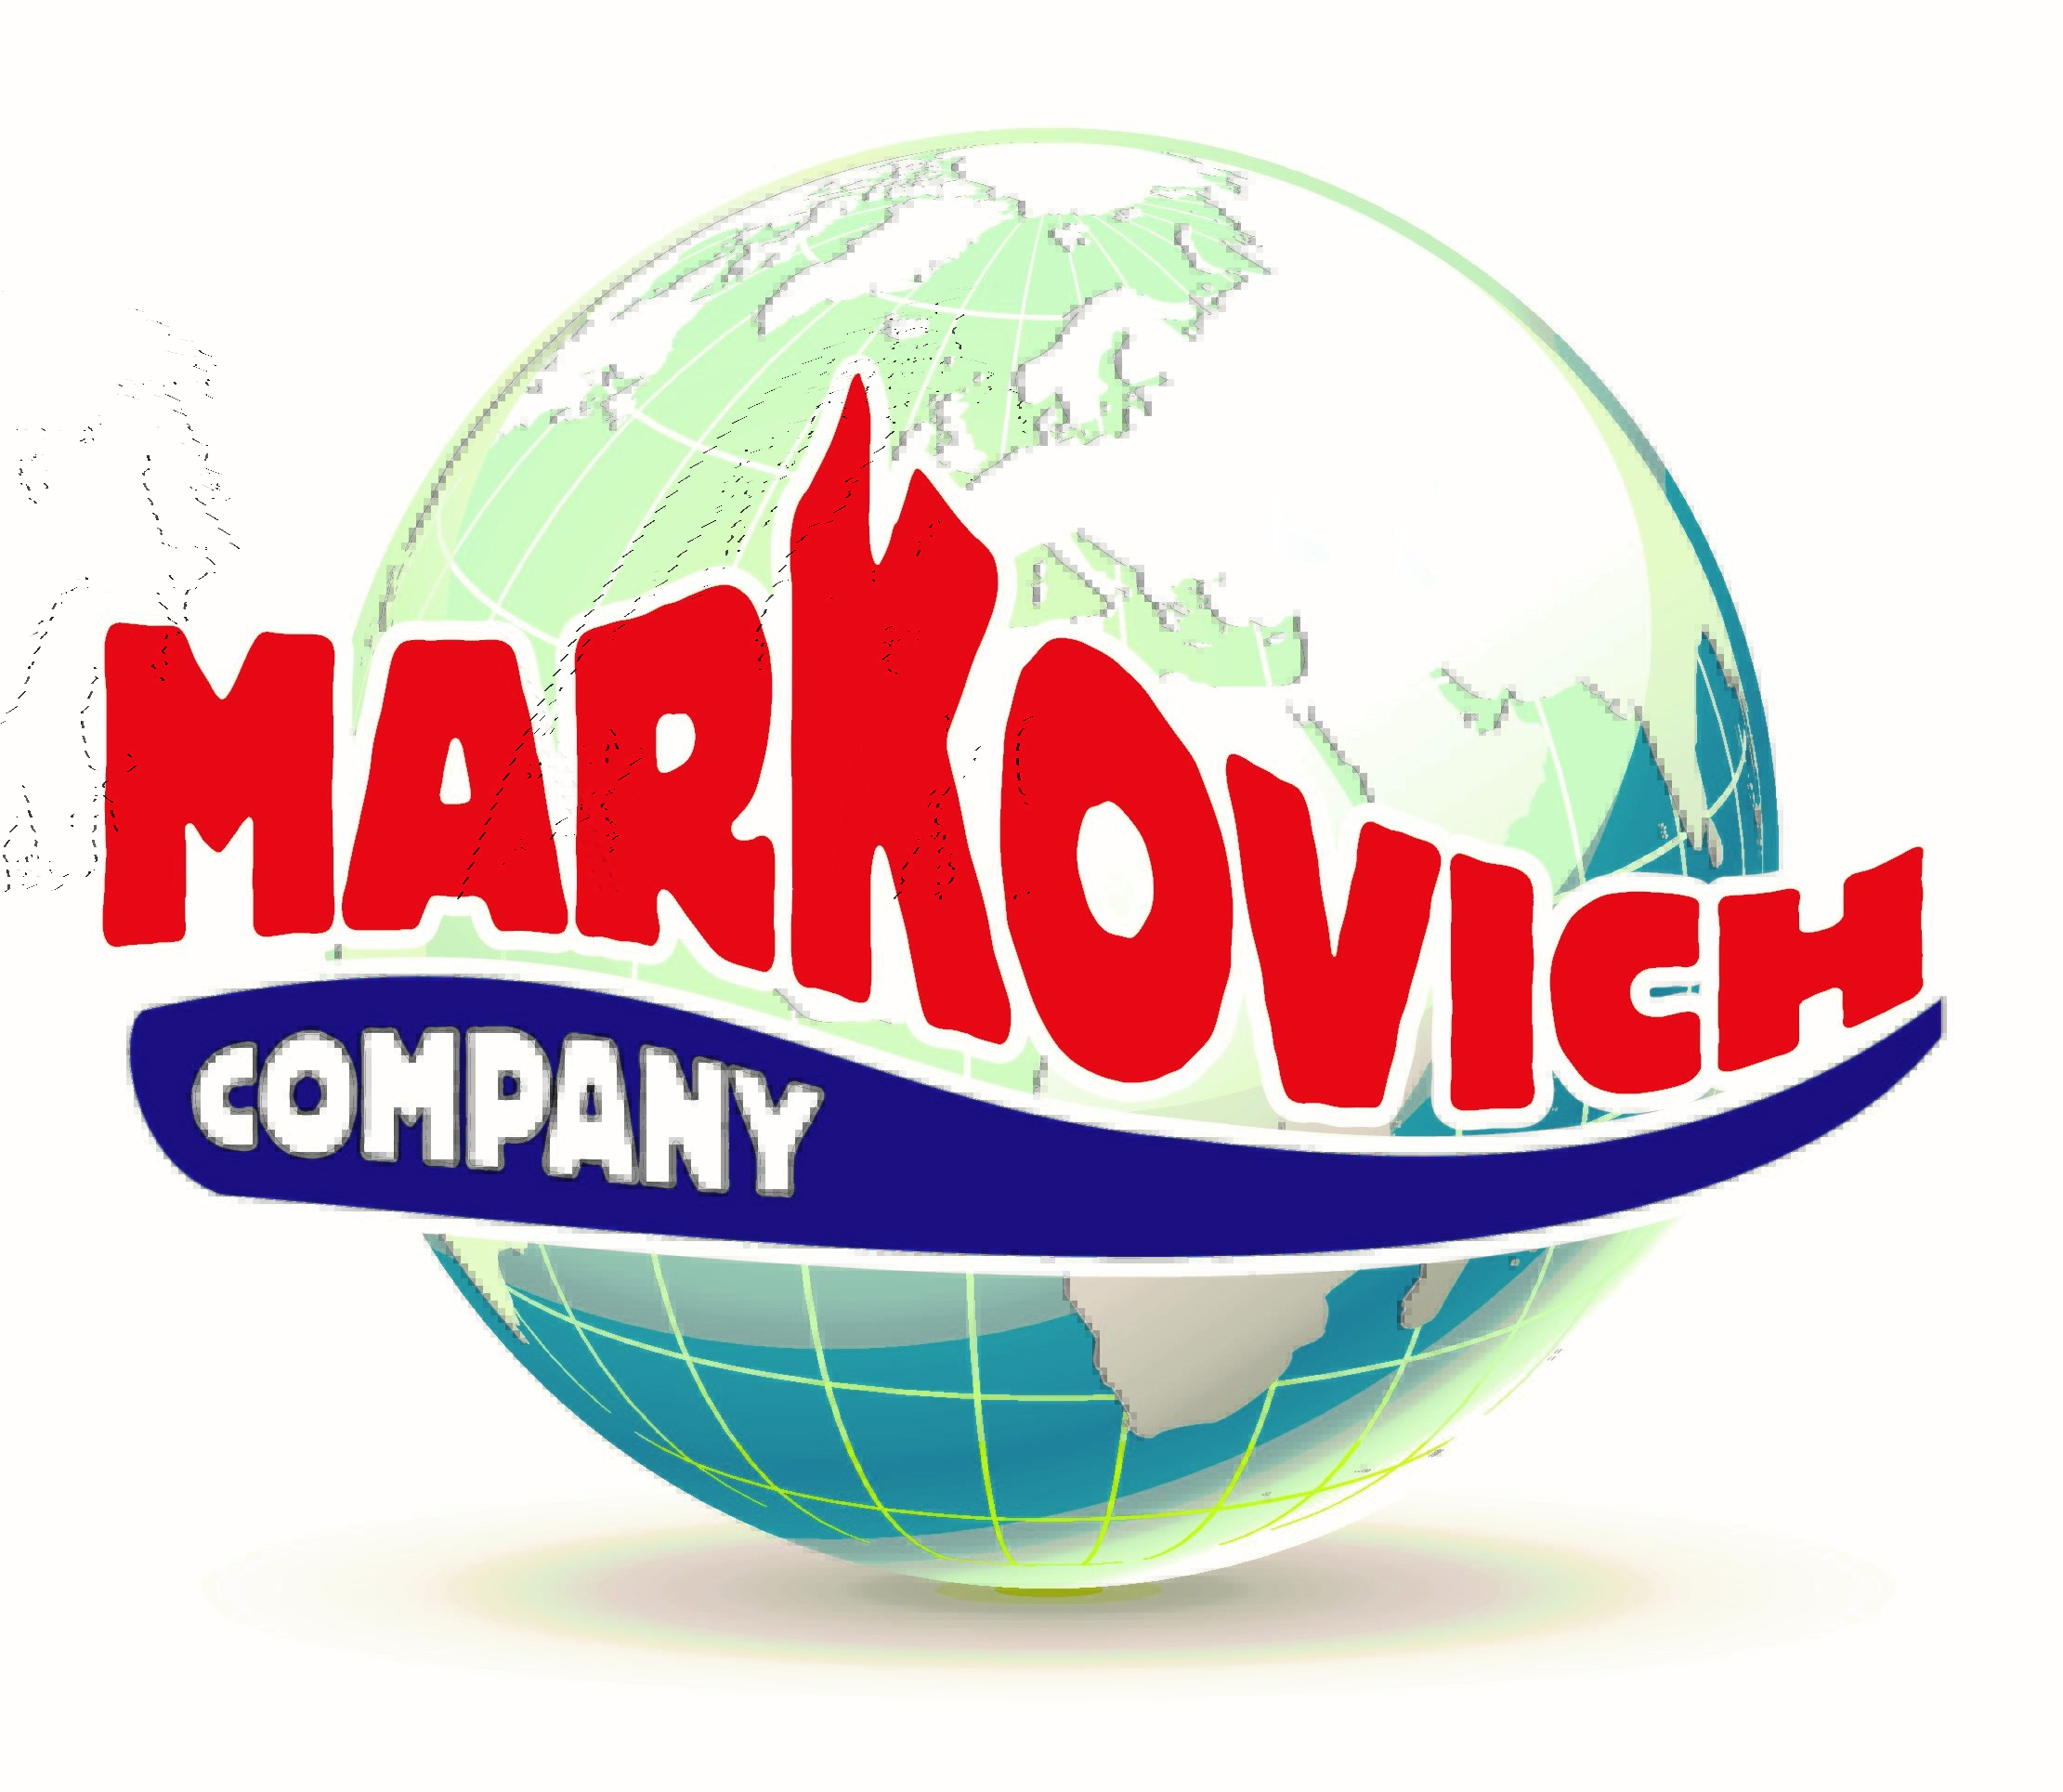 Markovich Company